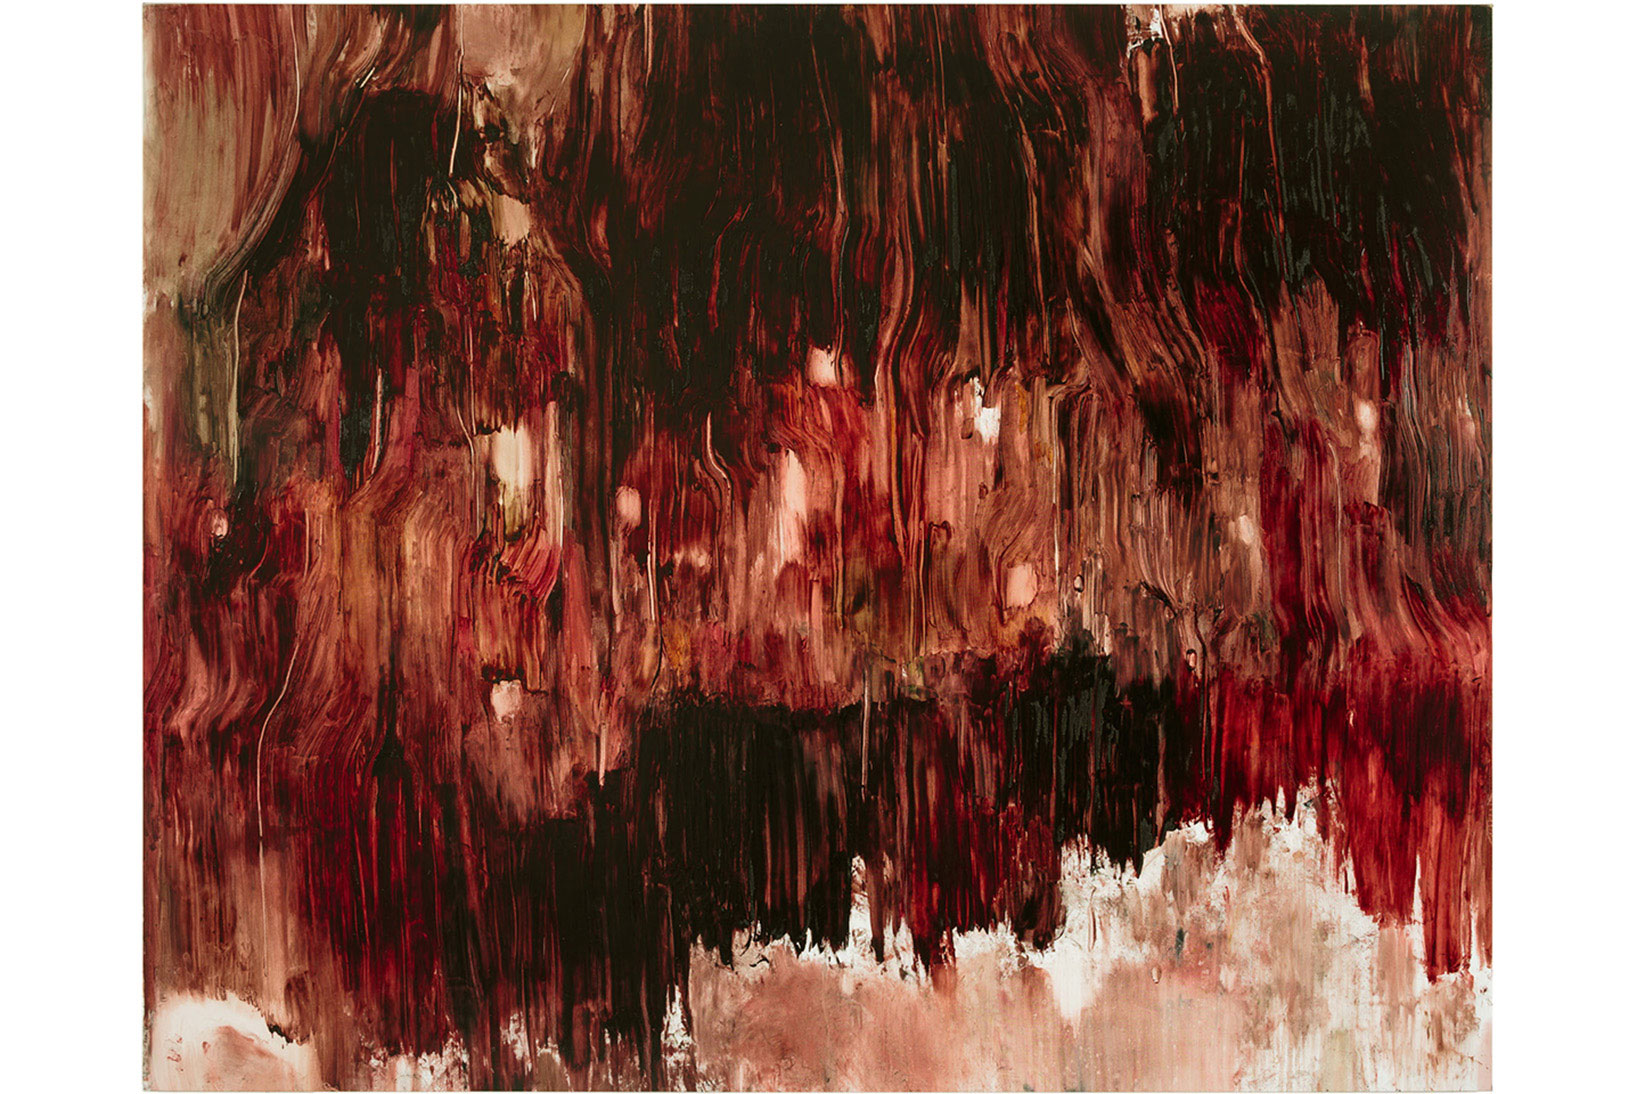 Julia Selin, "Untitled" 2014, oil on canvas, 196 x 245 cm